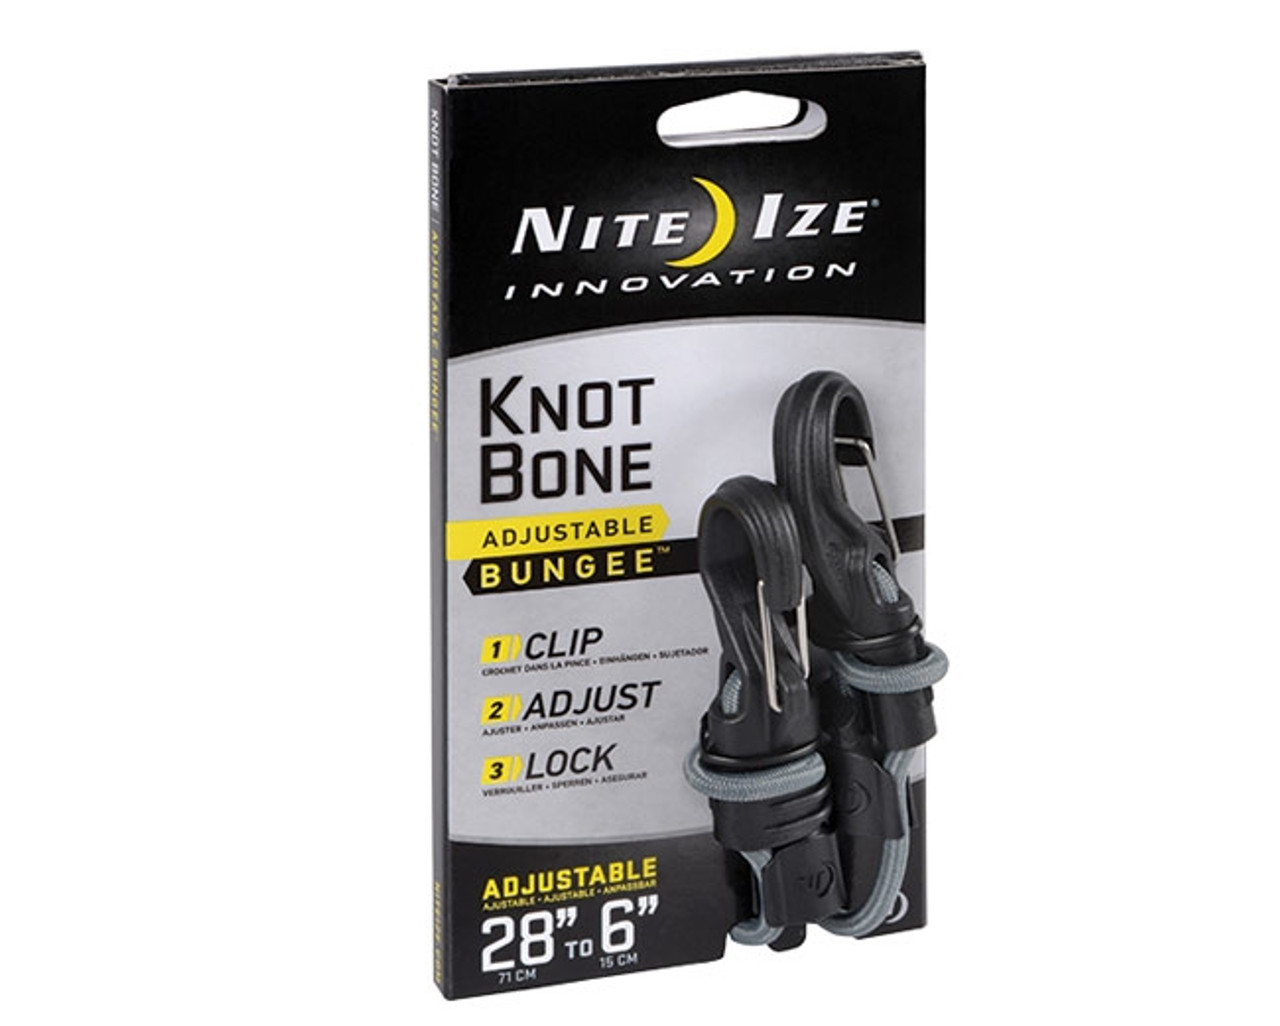 Nite Ize KnotBone Adjustable Bungee Cords